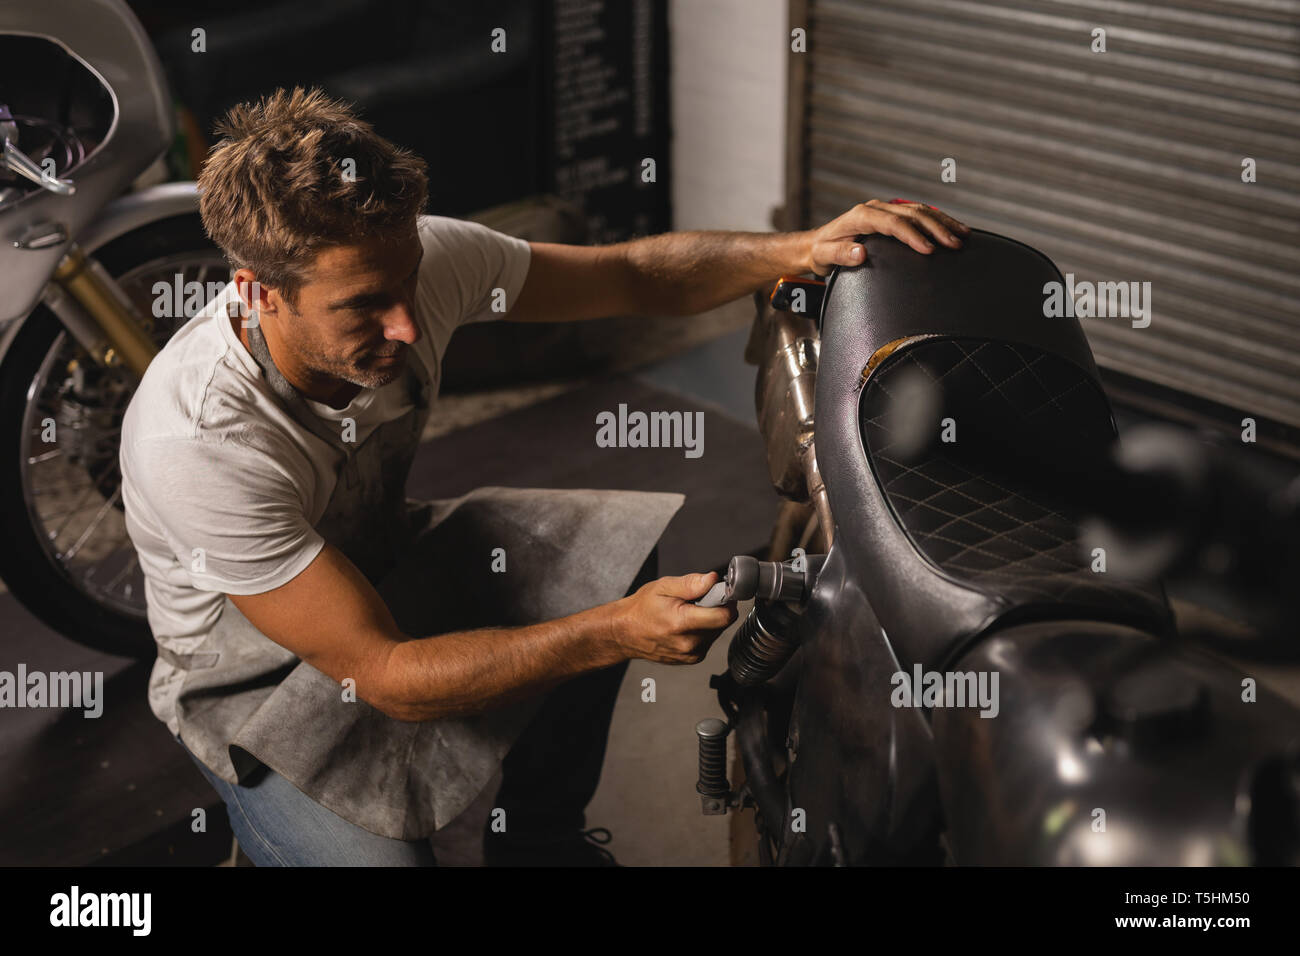 Bike mechanic checking bike with ratchet wrench Stock Photo